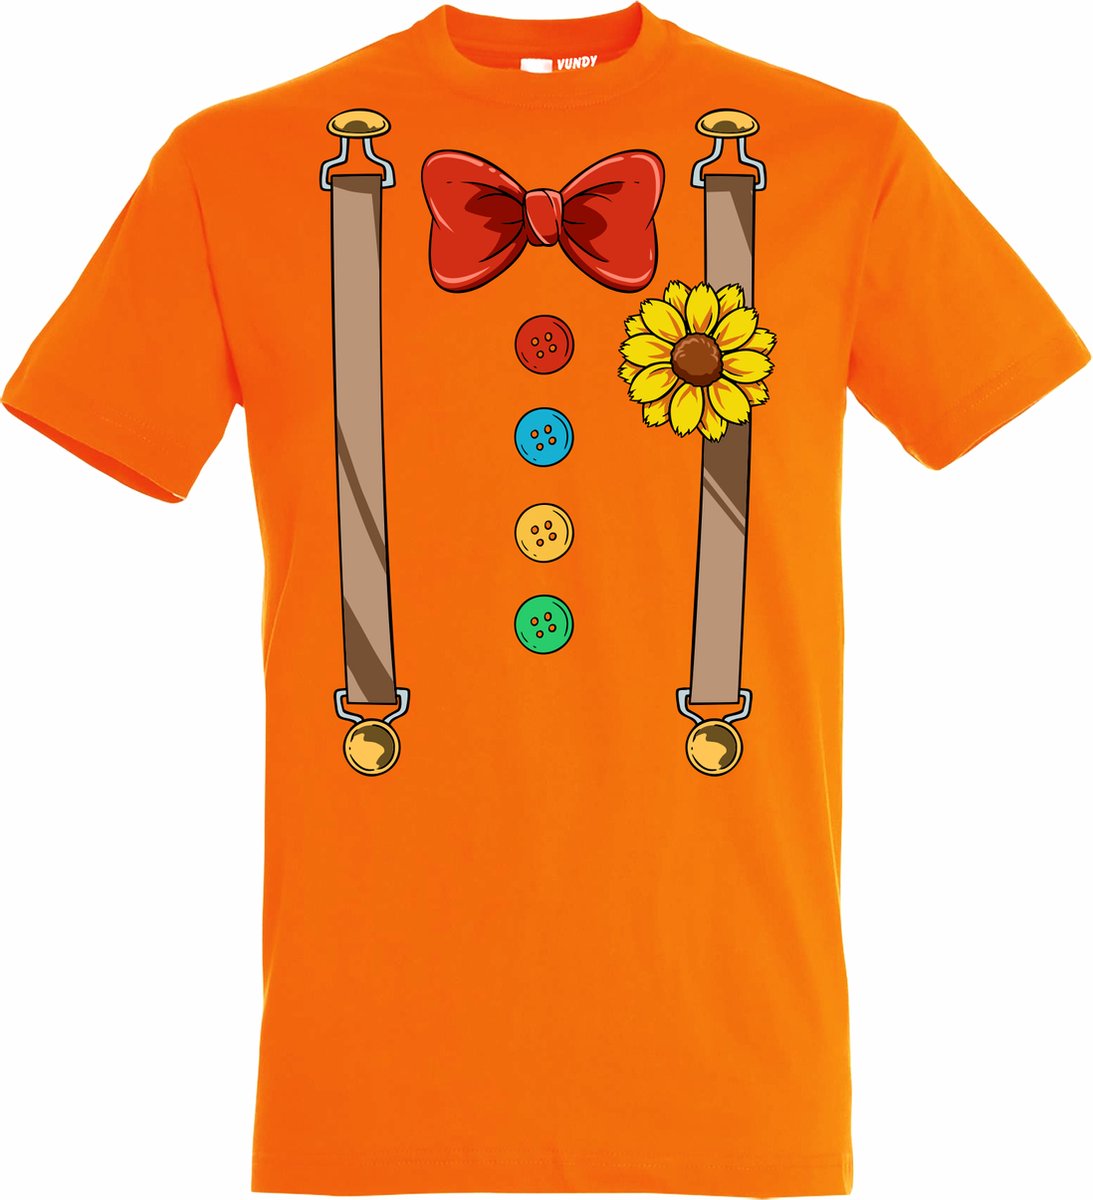 T-shirt Bretels Kostuum | Carnaval | Carnavalskleding Dames Heren | Oranje | maat XL